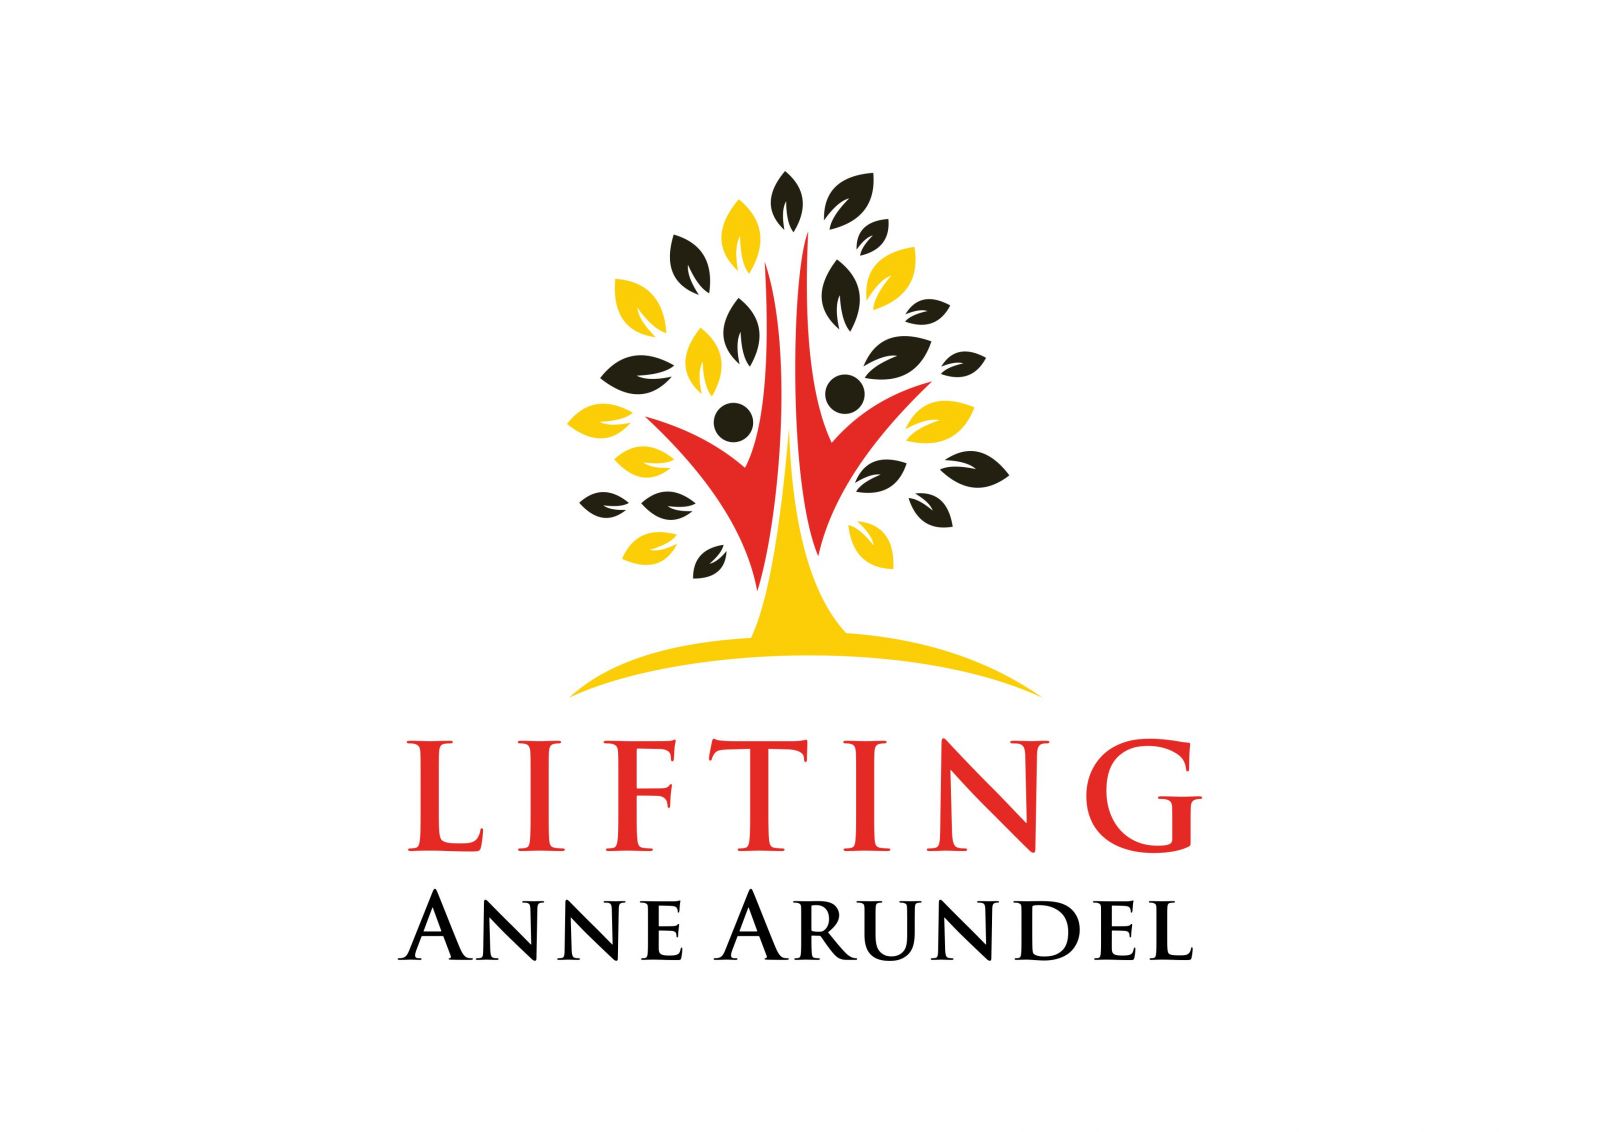 Lifting Anne Arundel